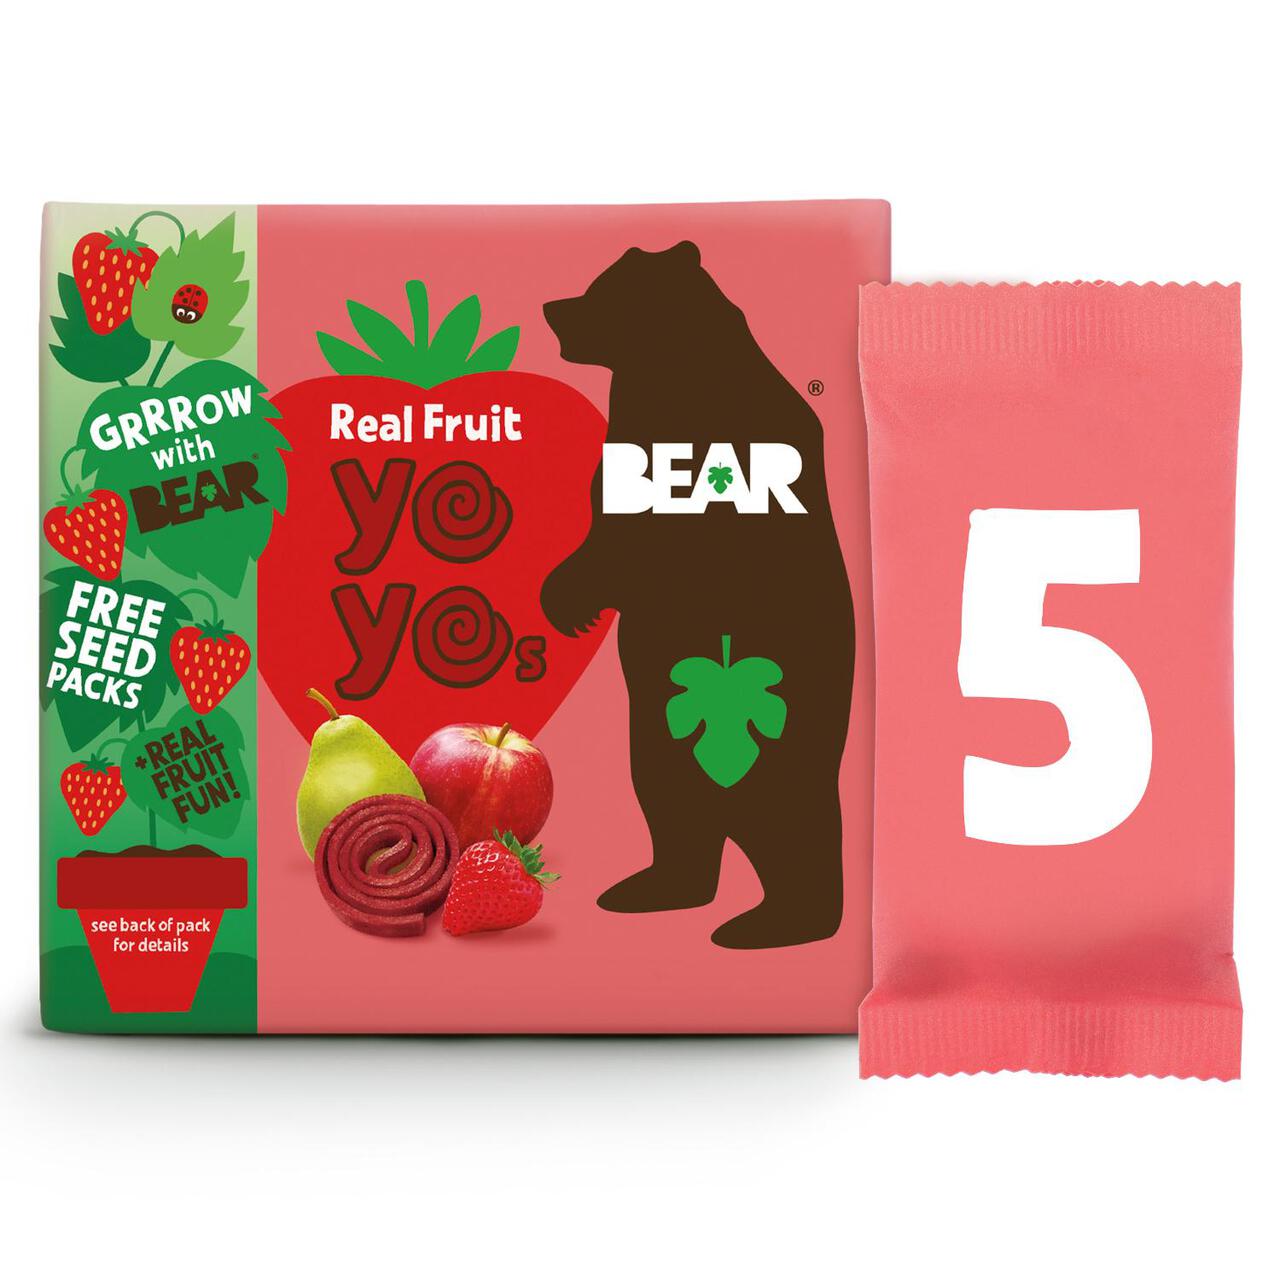 BEAR Fruit Yoyos Strawberry Multipack 5 x 20g